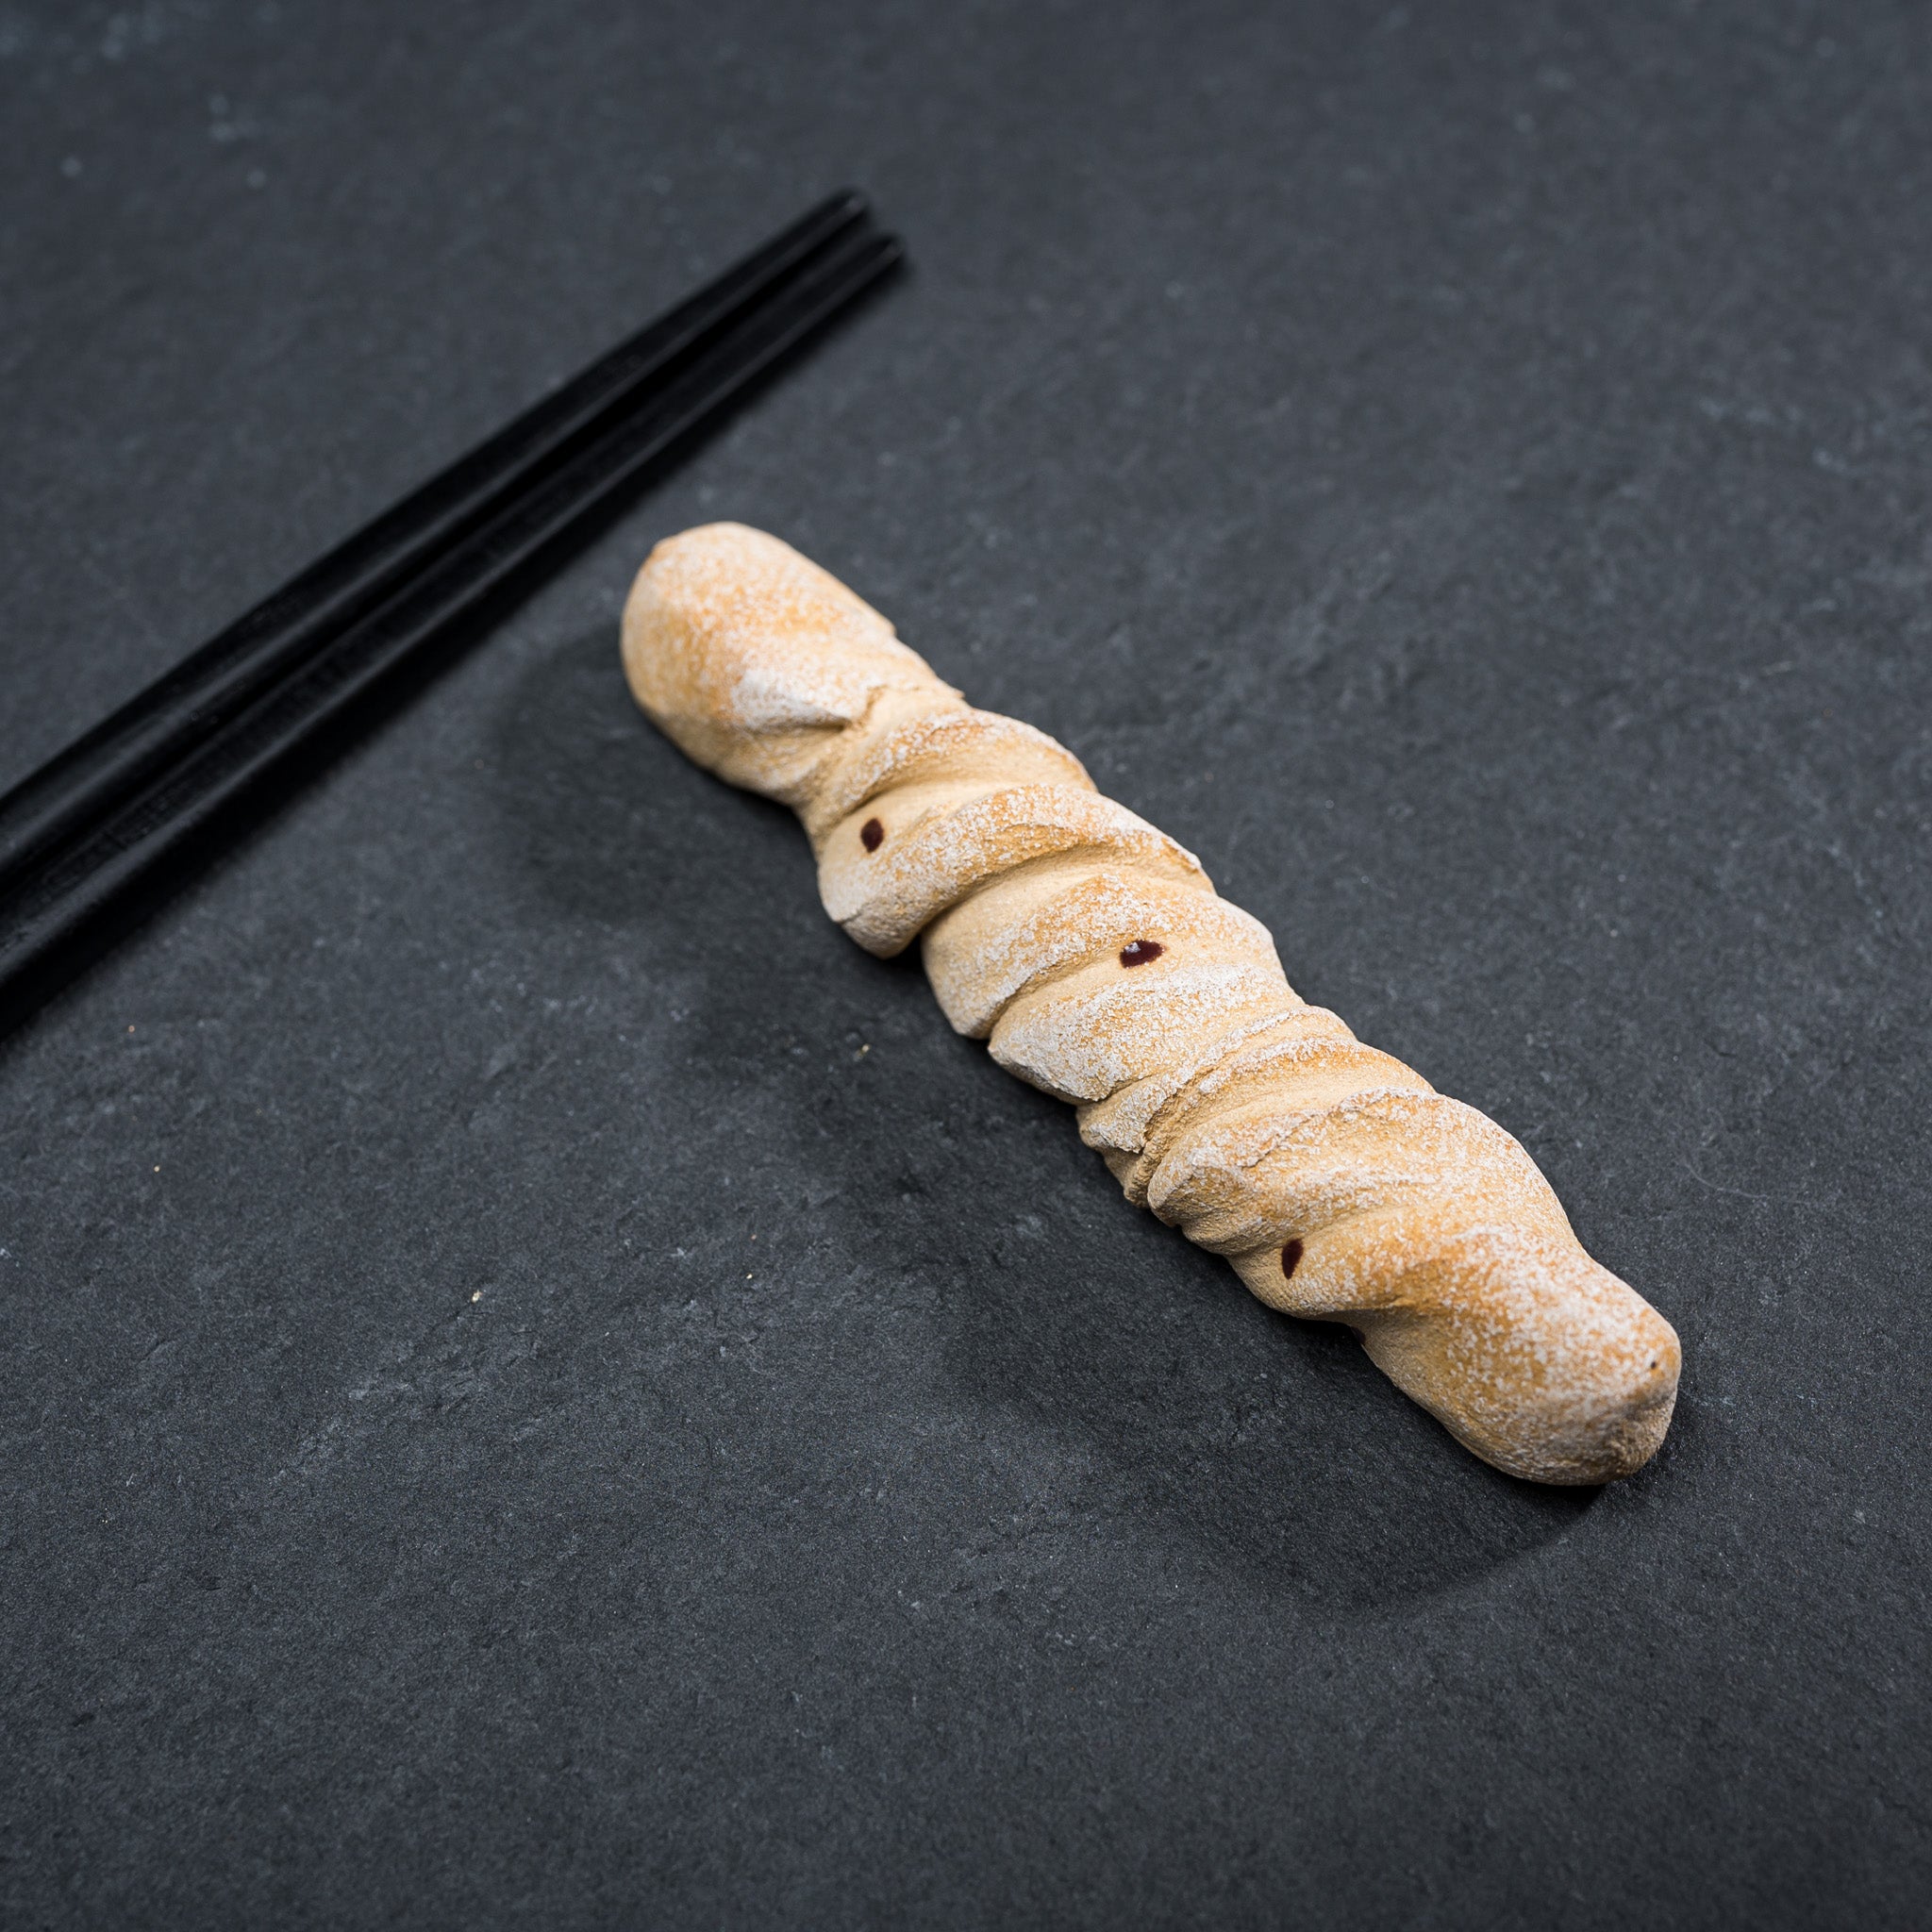 Bakery Fresh Produce Chopstick Rest - 14 Options